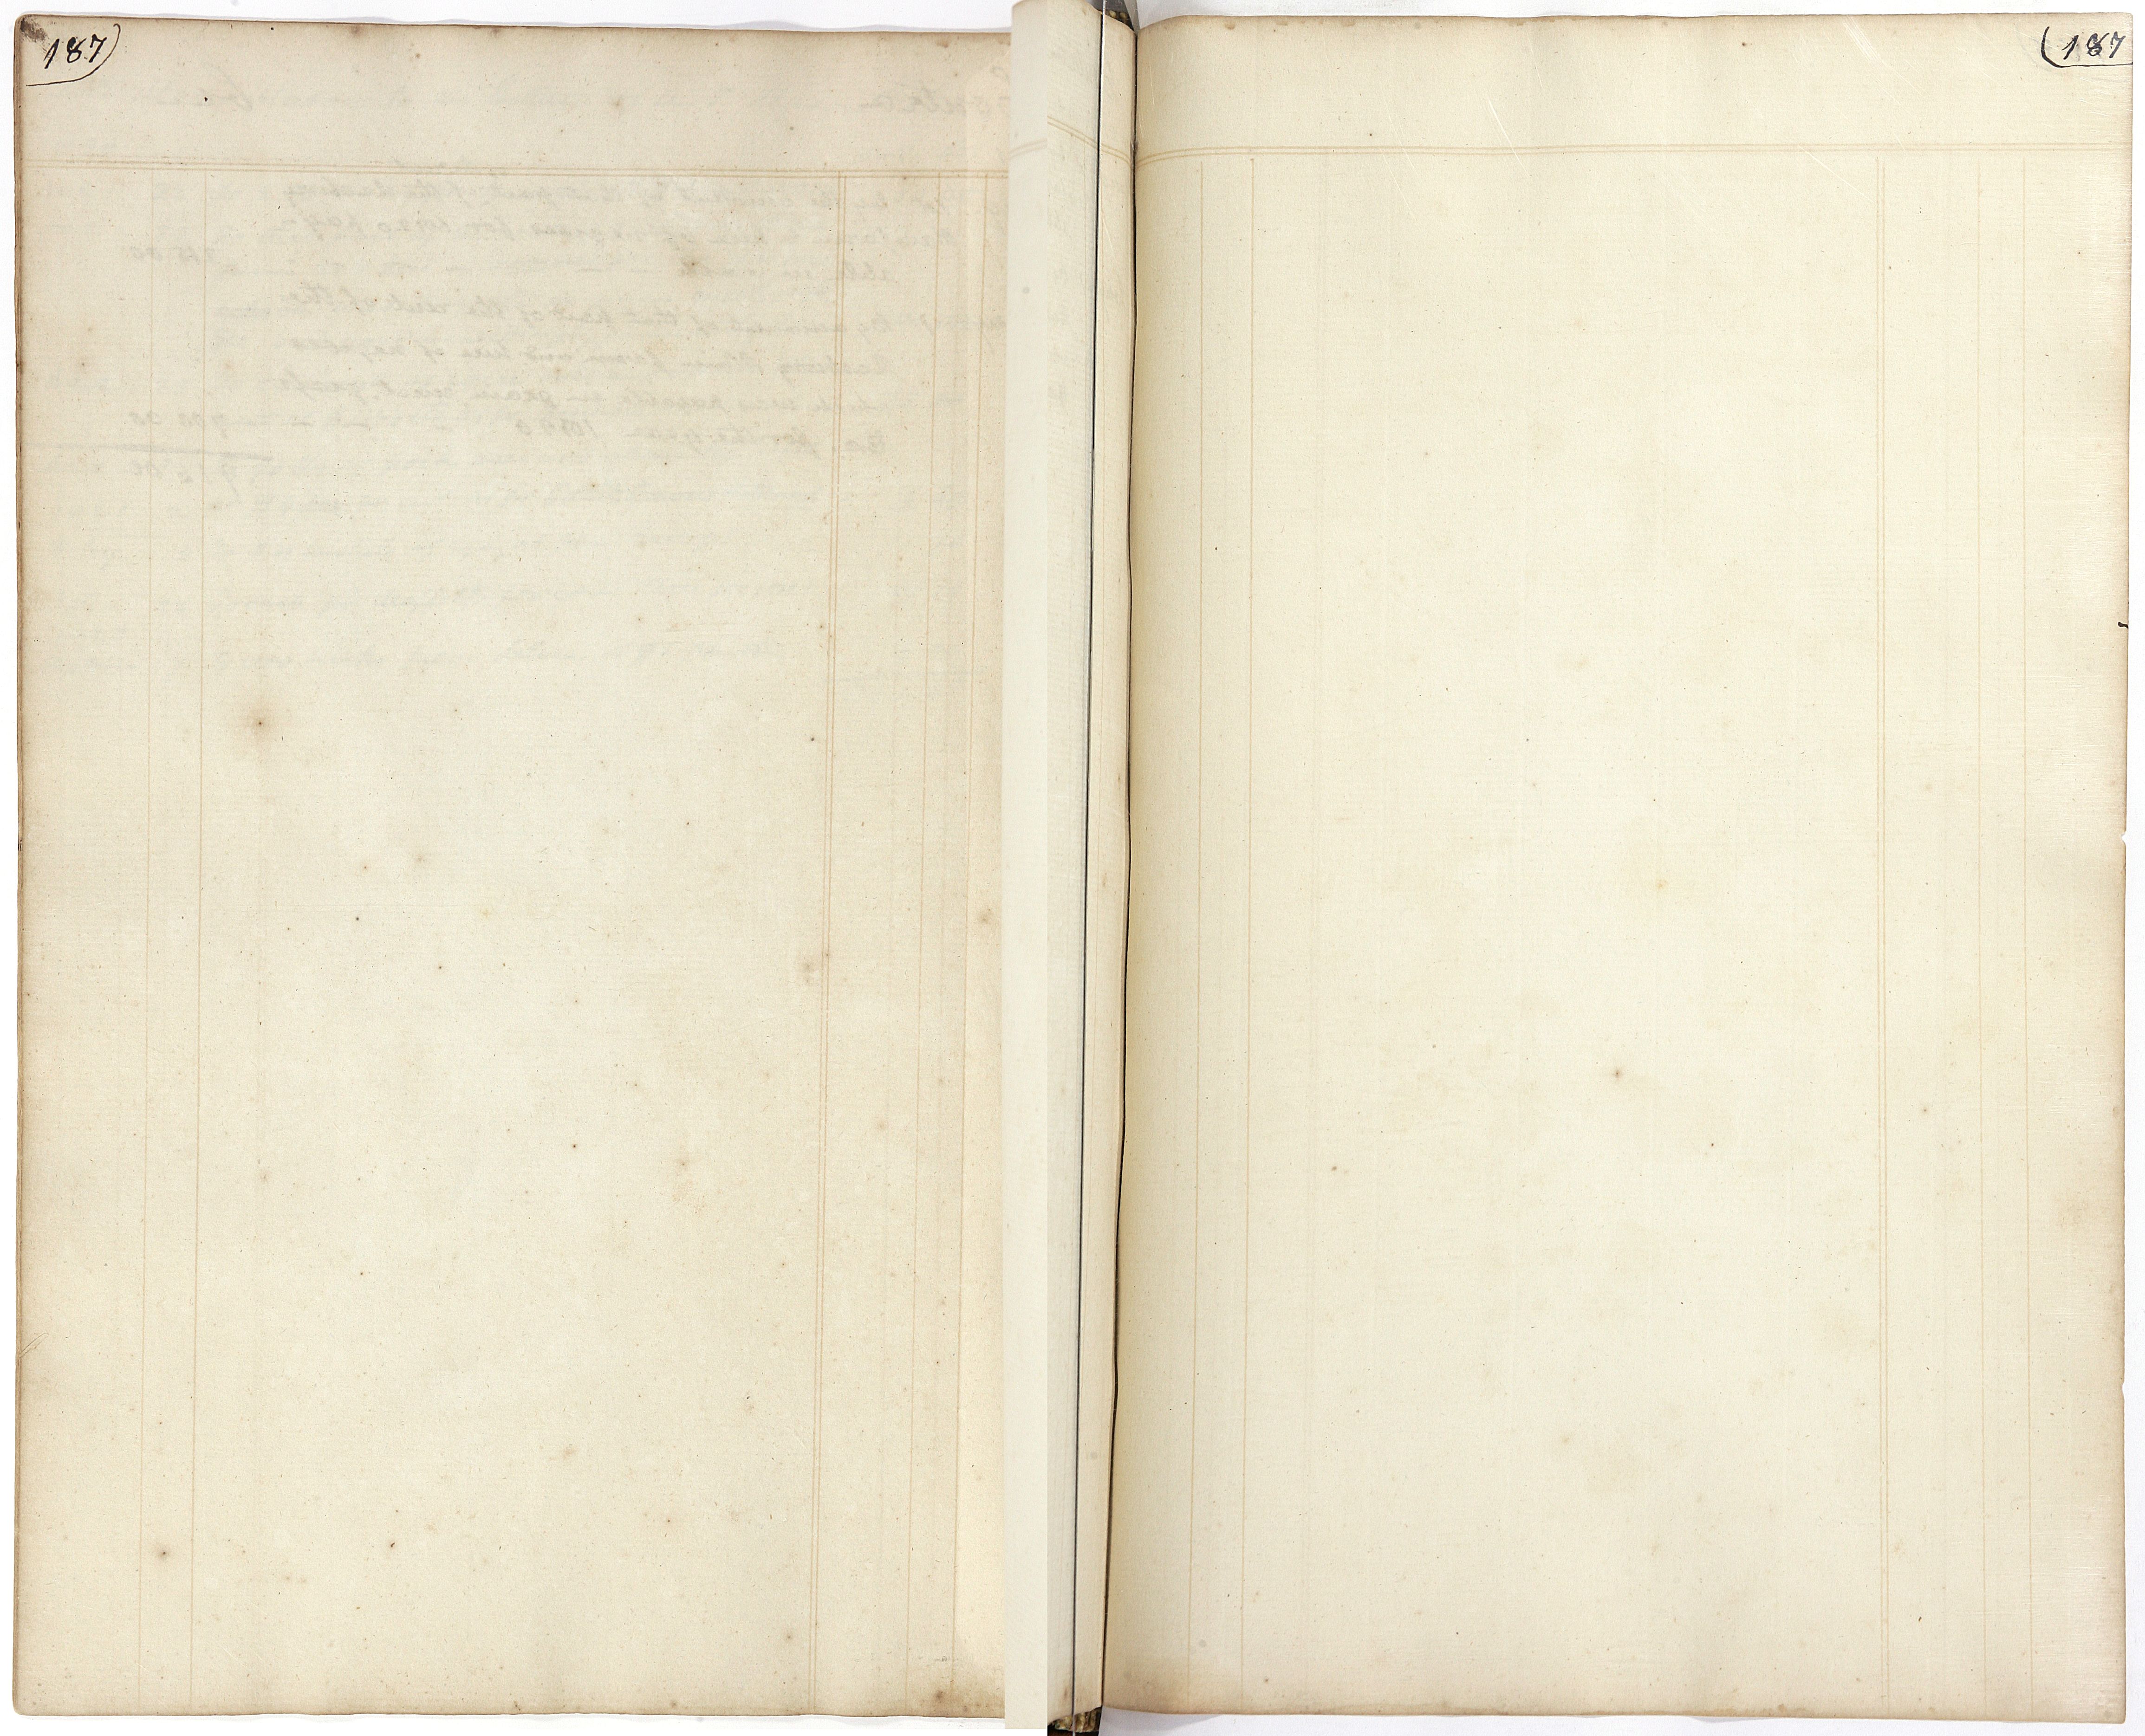 Image of Folio 187 (transcription below)